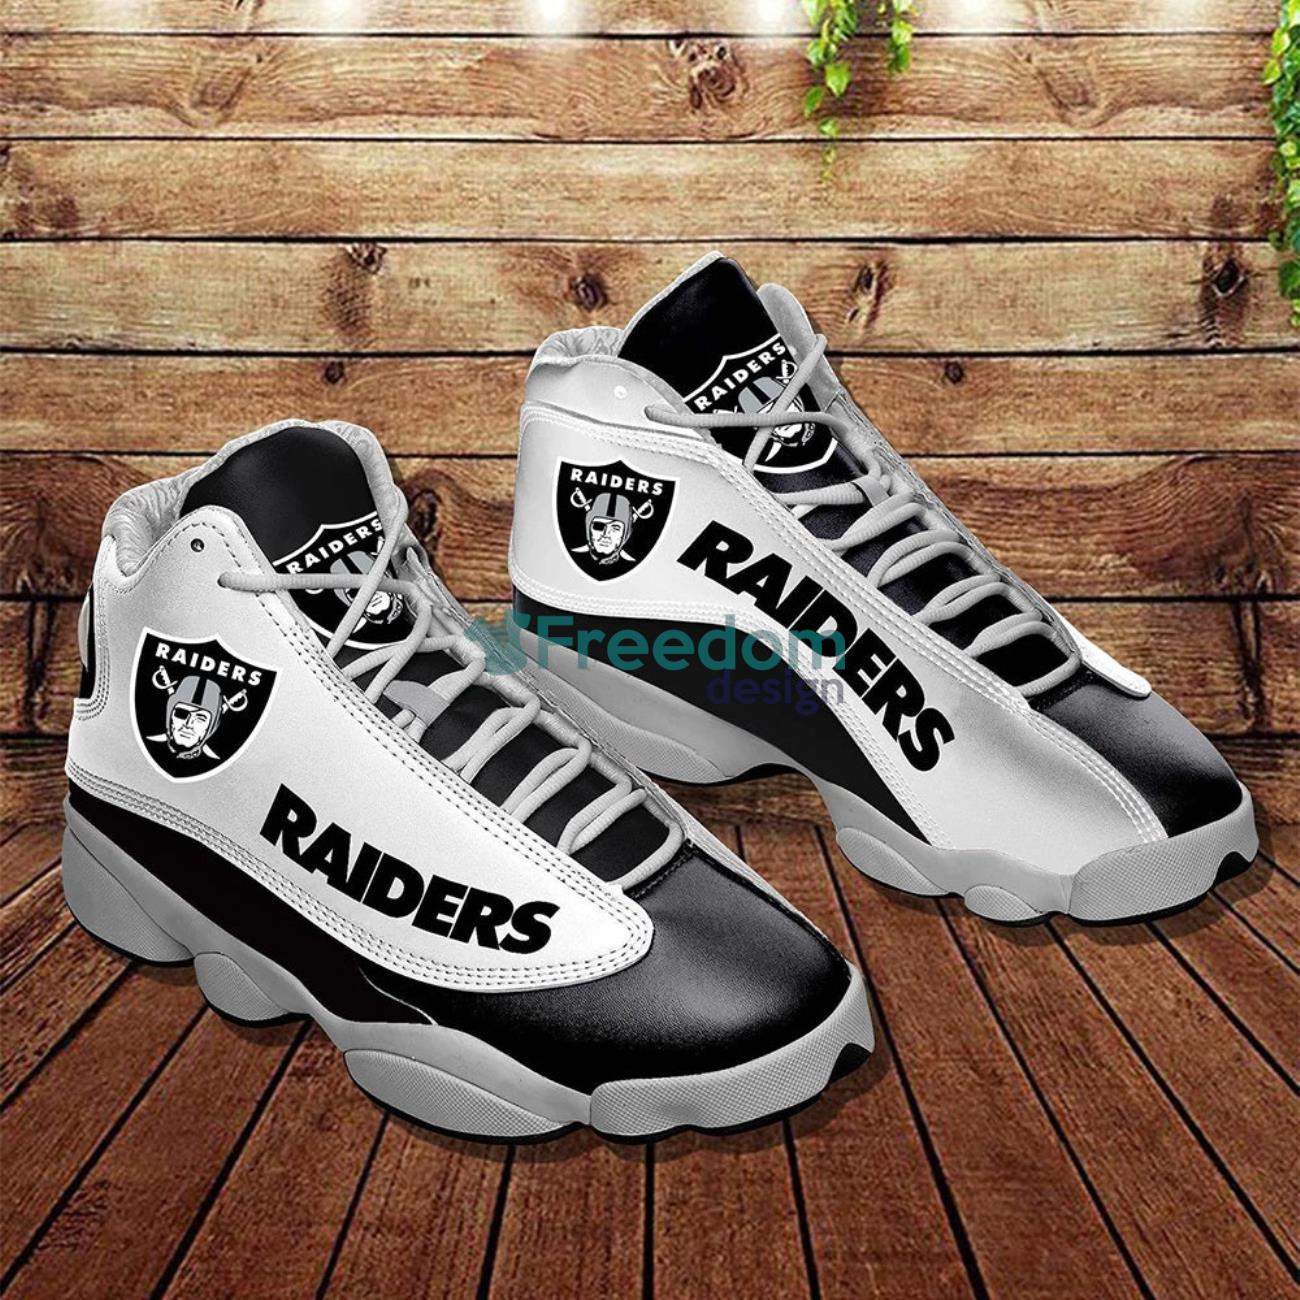 Las Vegas Raiders Team Air Jordan 13 Sneaker Shoes For Fans